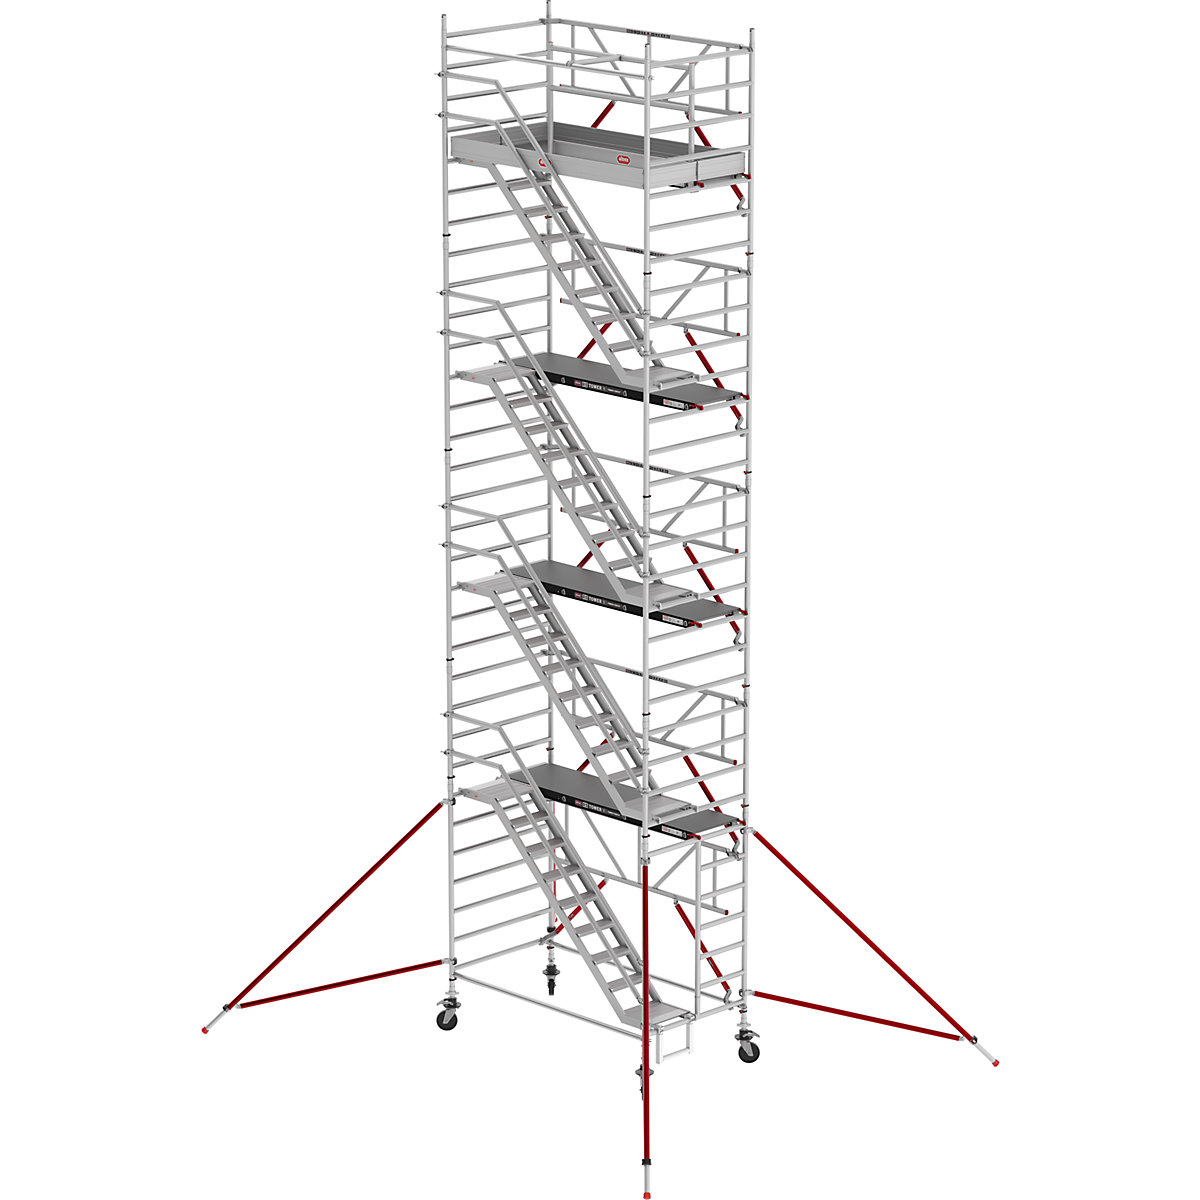 Oder s stopnicami RS TOWER 53, širok – Altrex, lesena ploščad, dolžina 1,85 m, delovna višina 10,20 m